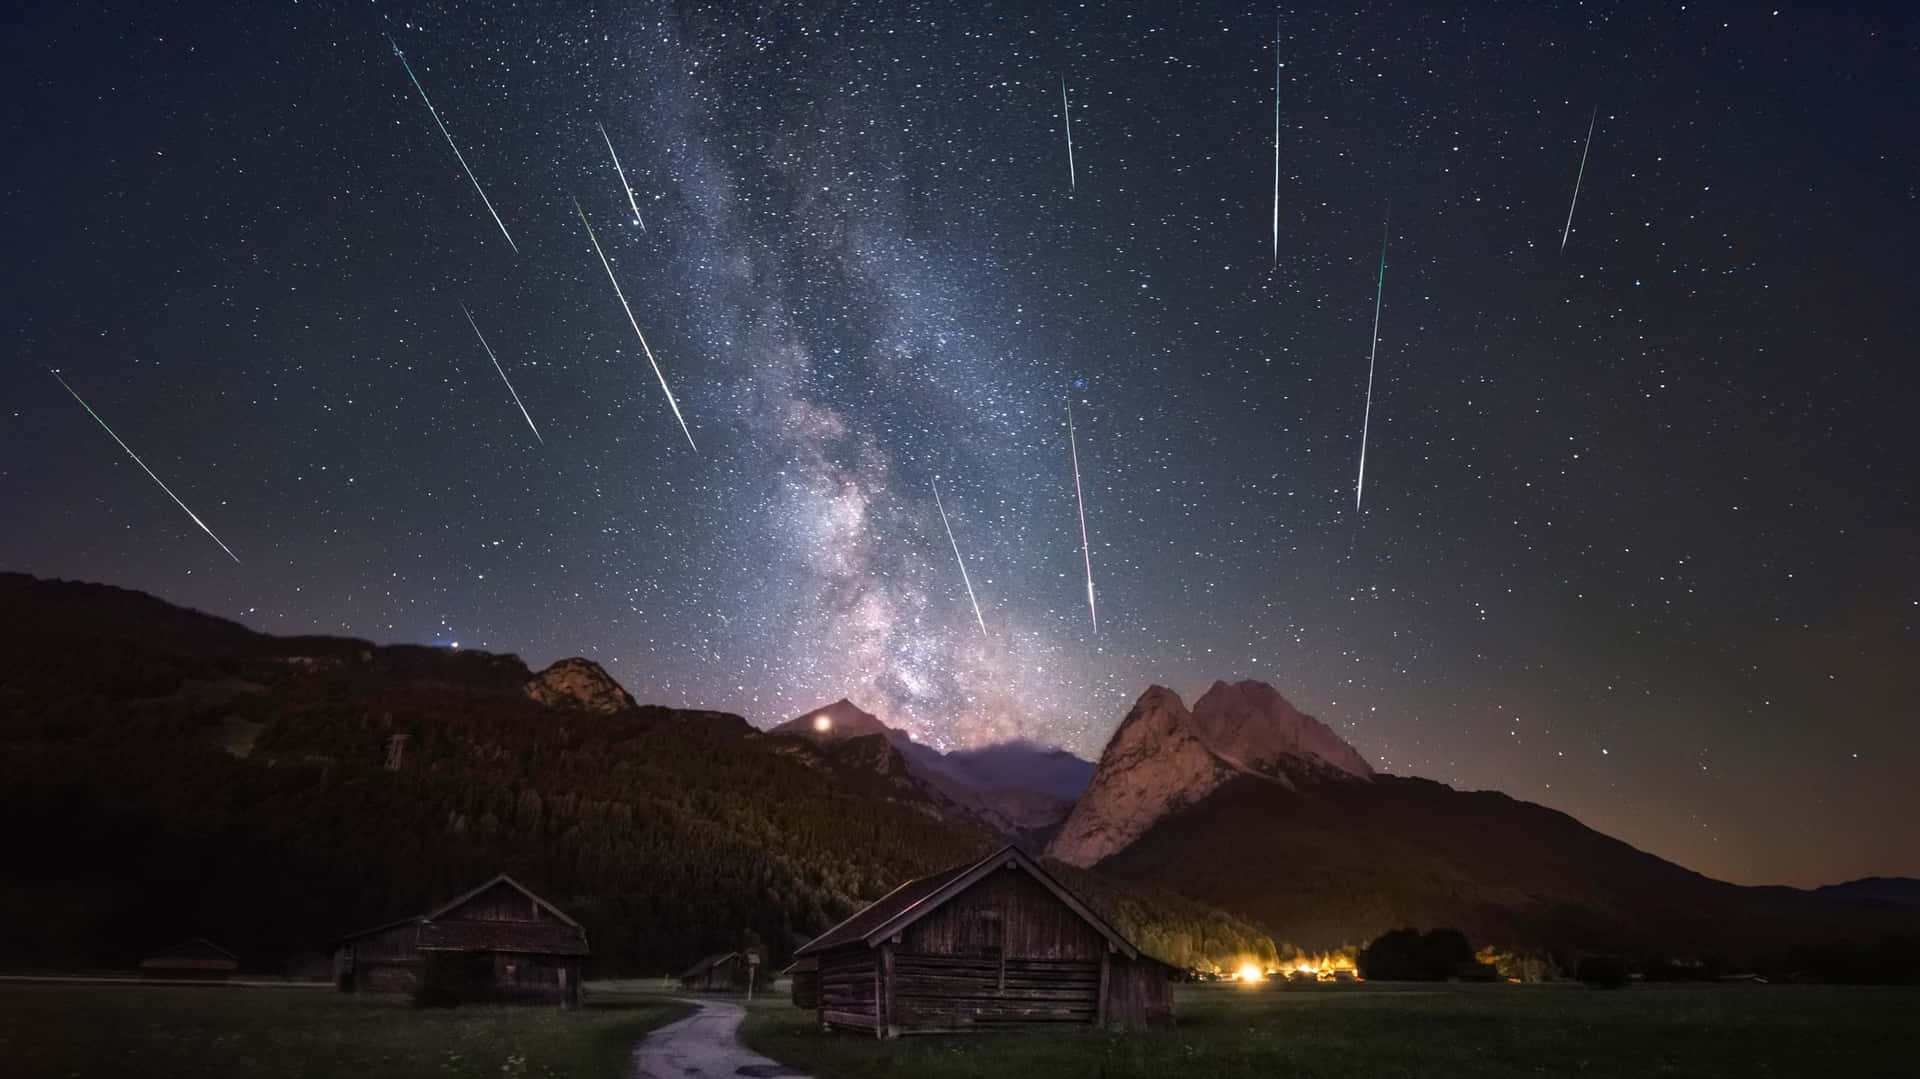 A streaking meteor in the night sky